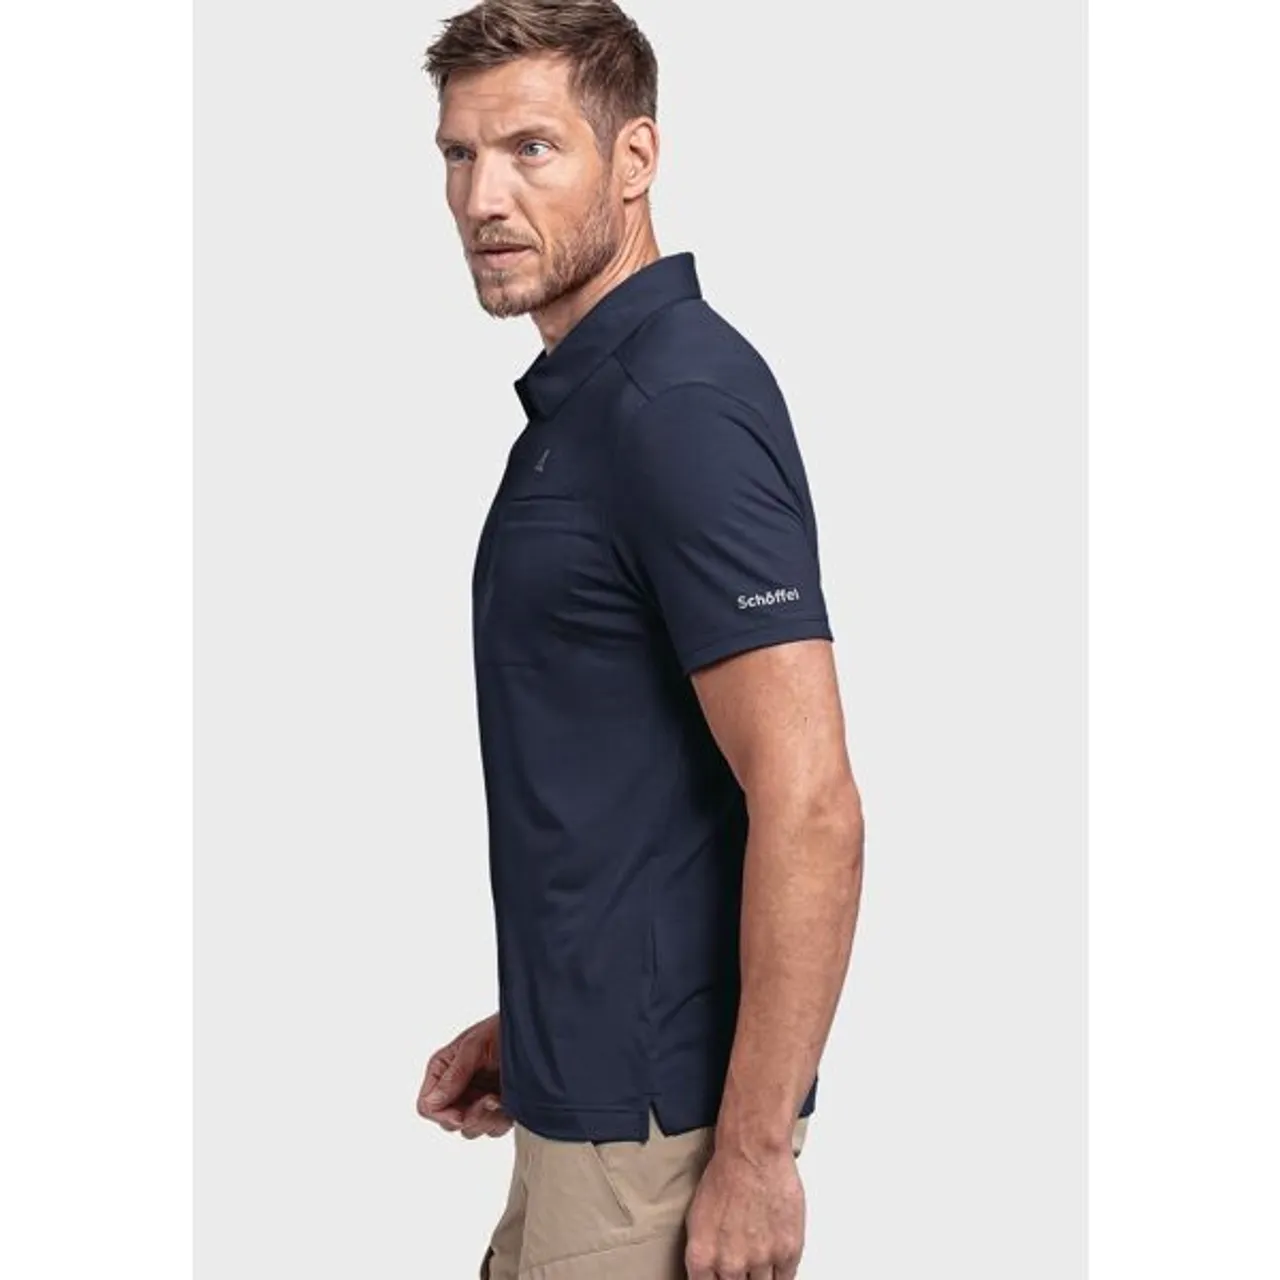 Poloshirt SCHÖFFEL "Polo Shirt Ramseck M" Gr. 56, blau (8820, blau) Herren Shirts Kurzarm